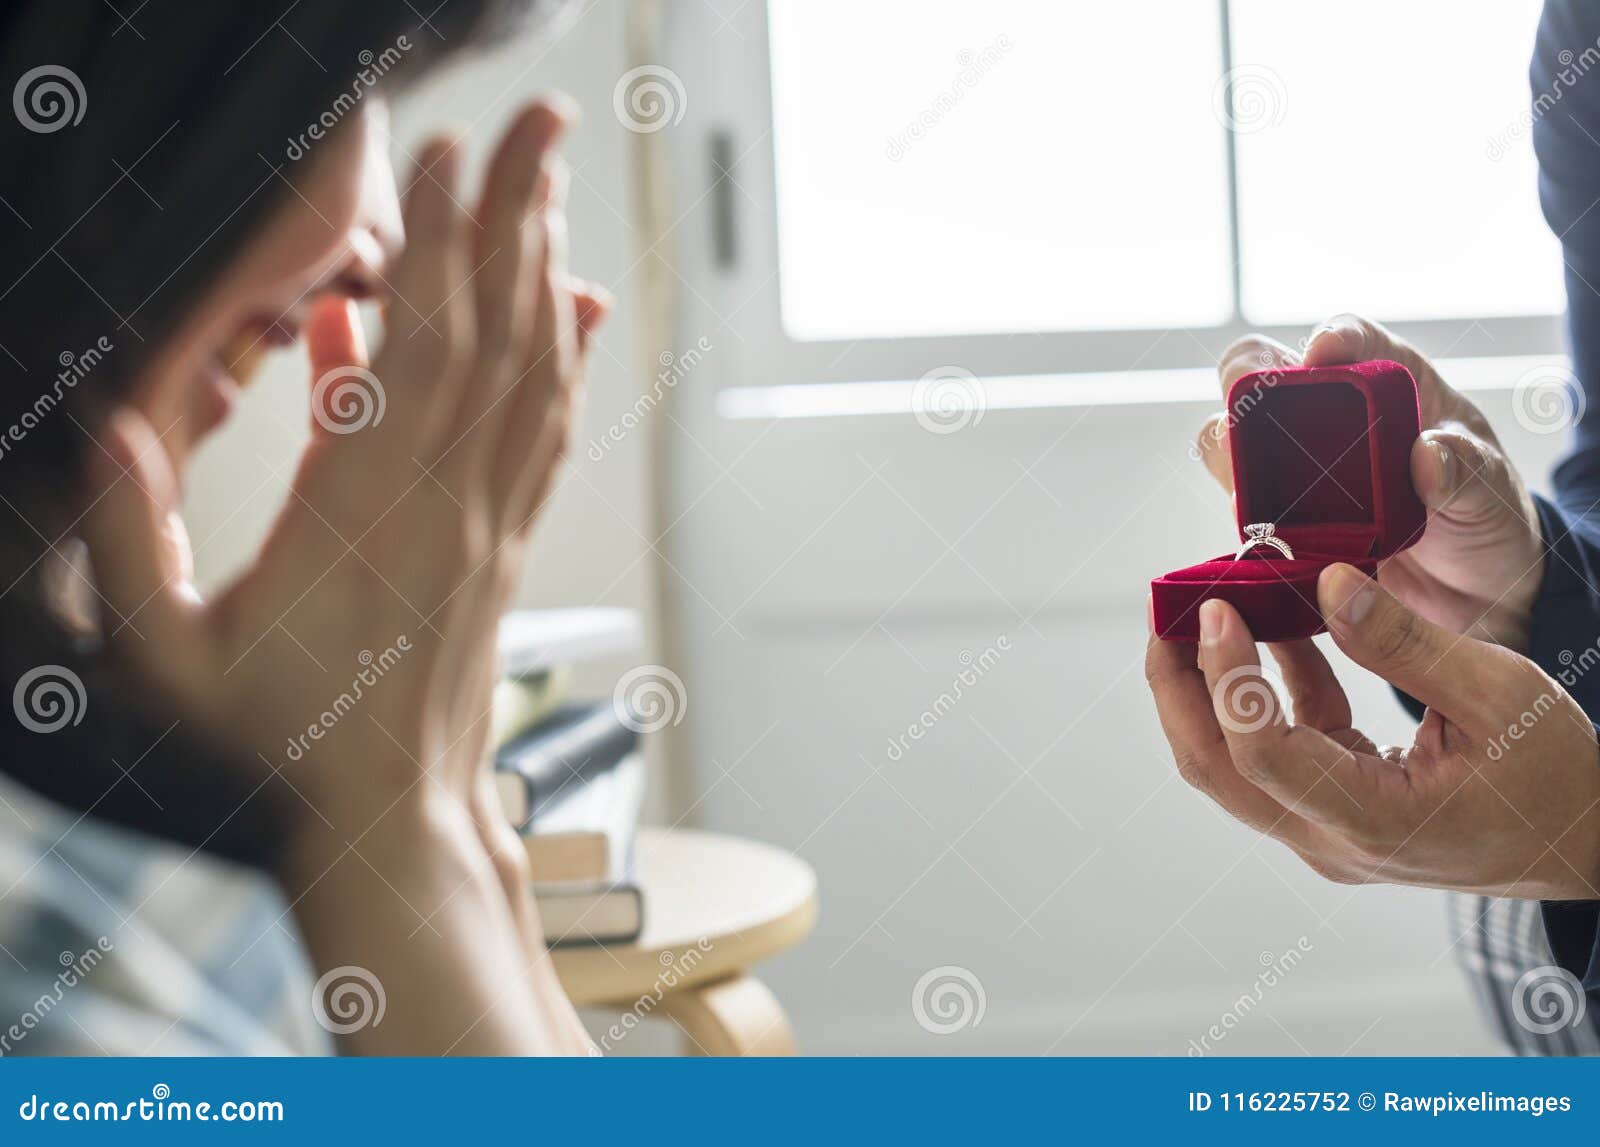 man proposing to his girlfriend